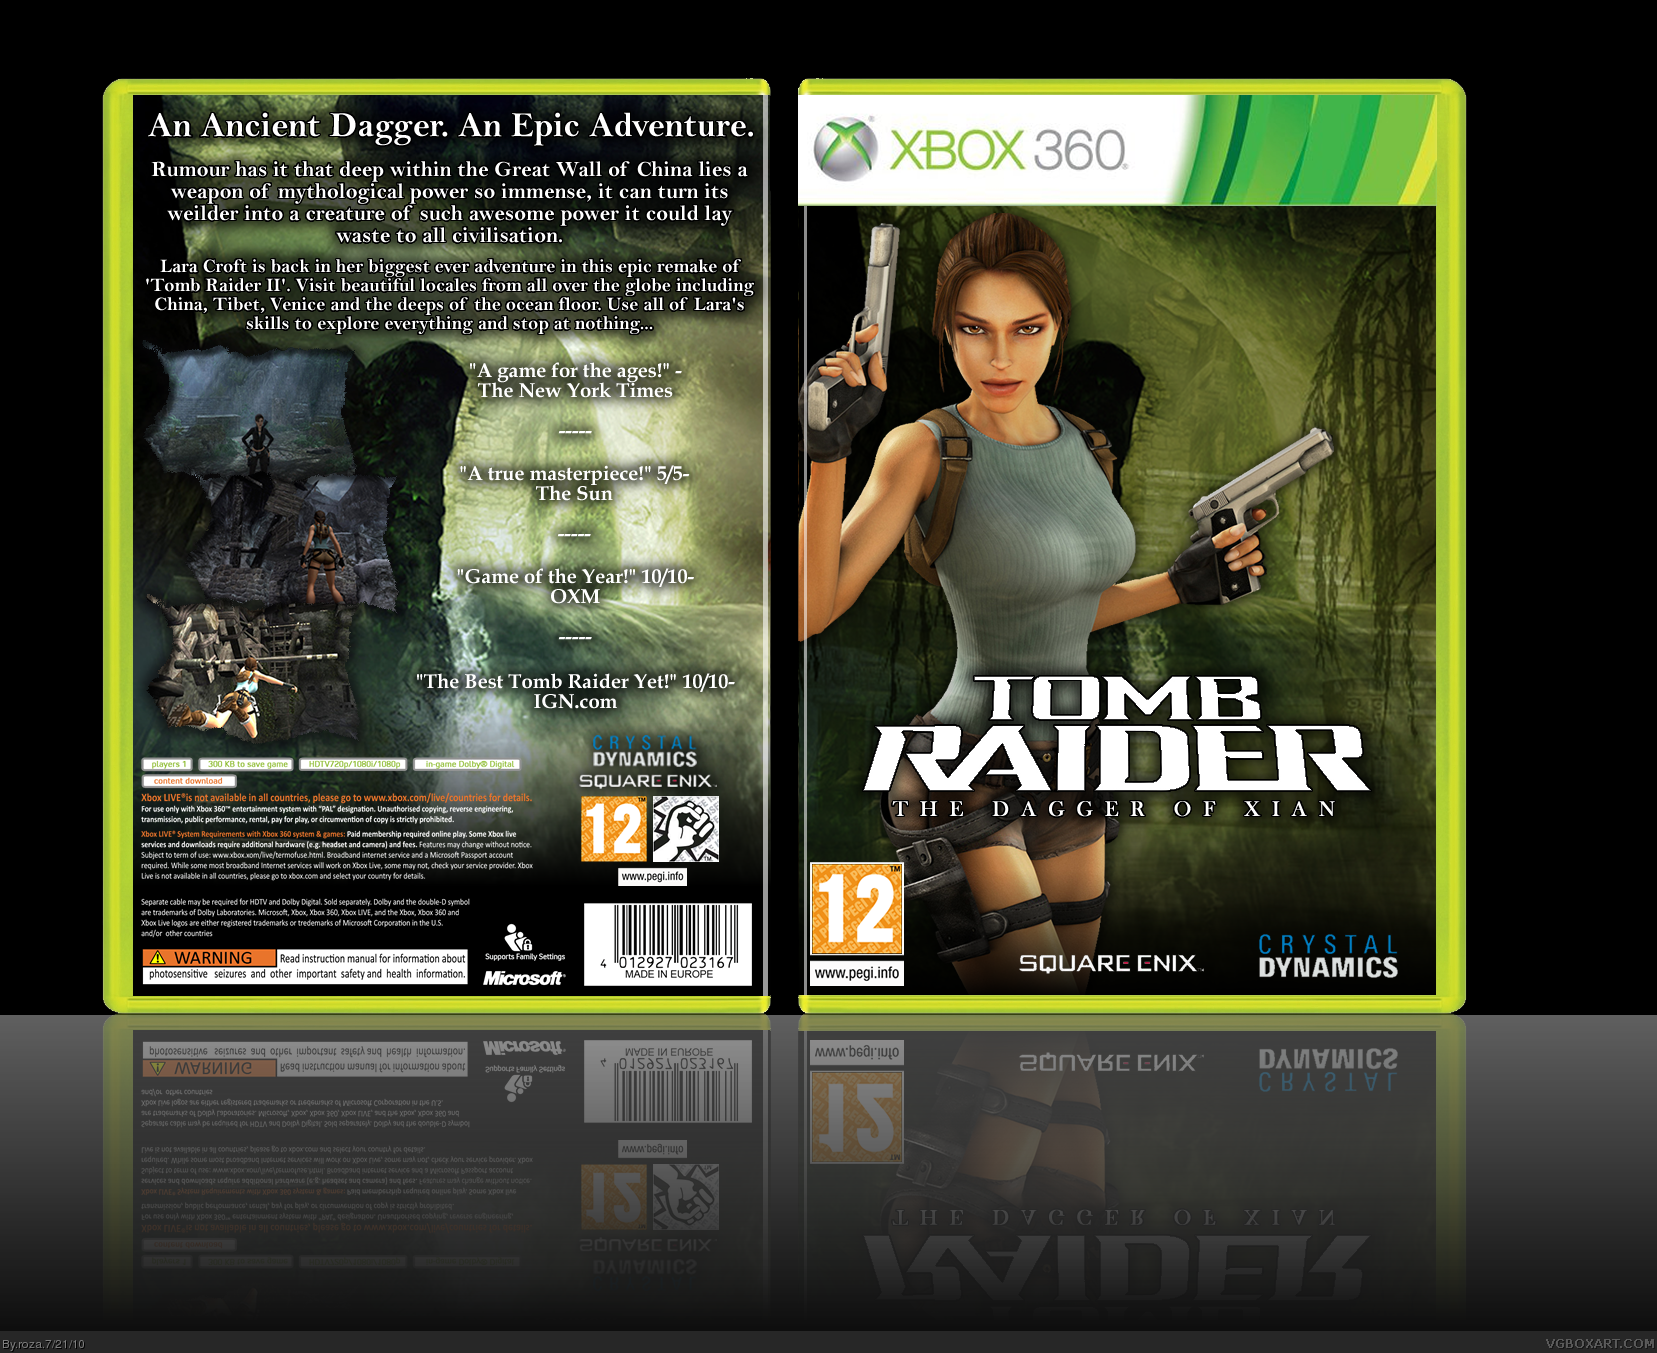 Tomb Raider: The Dagger of Xian box cover